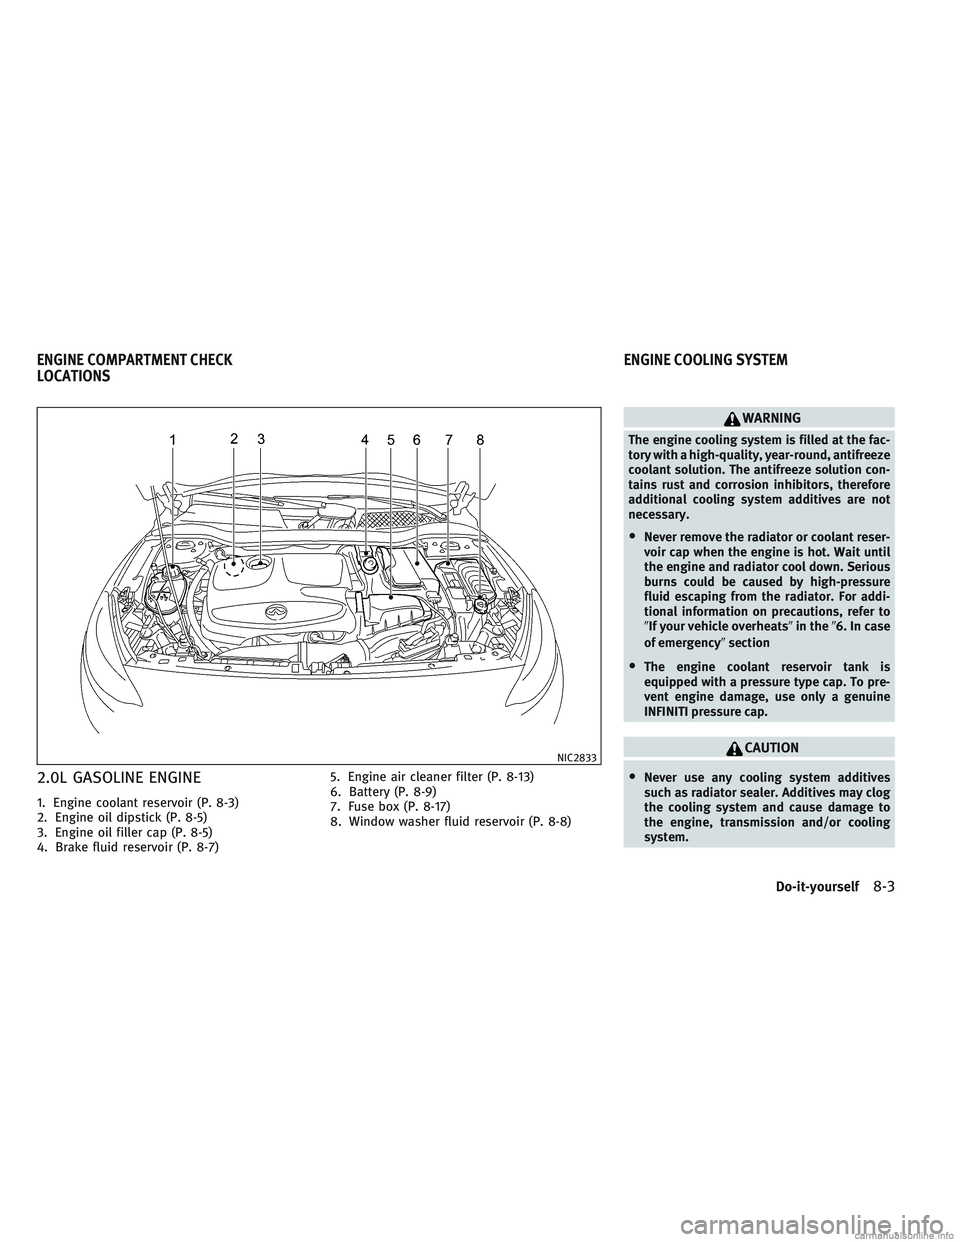 INFINITI QX30 2017  Owners Manual 2.0L GASOLINE ENGINE
1. Engine coolant reservoir (P. 8-3)
2. Engine oil dipstick (P. 8-5)
3. Engine oil filler cap (P. 8-5)
4. Brake fluid reservoir (P. 8-7)5. Engine air cleaner filter (P. 8-13)
6. B